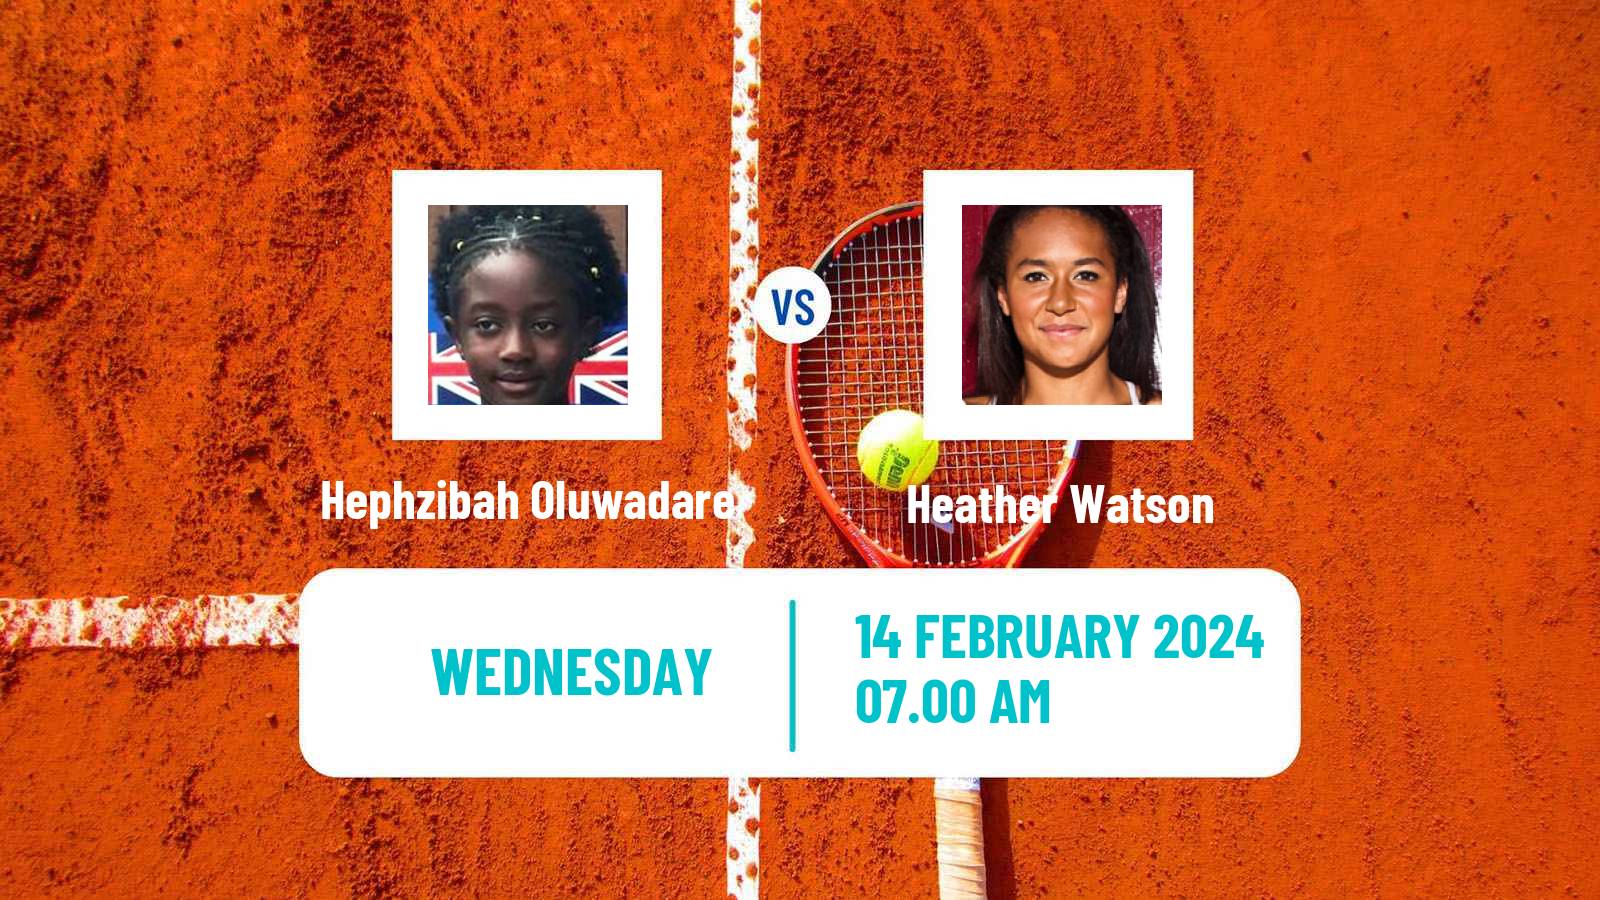 Tennis ITF W50 Roehampton Women Hephzibah Oluwadare - Heather Watson